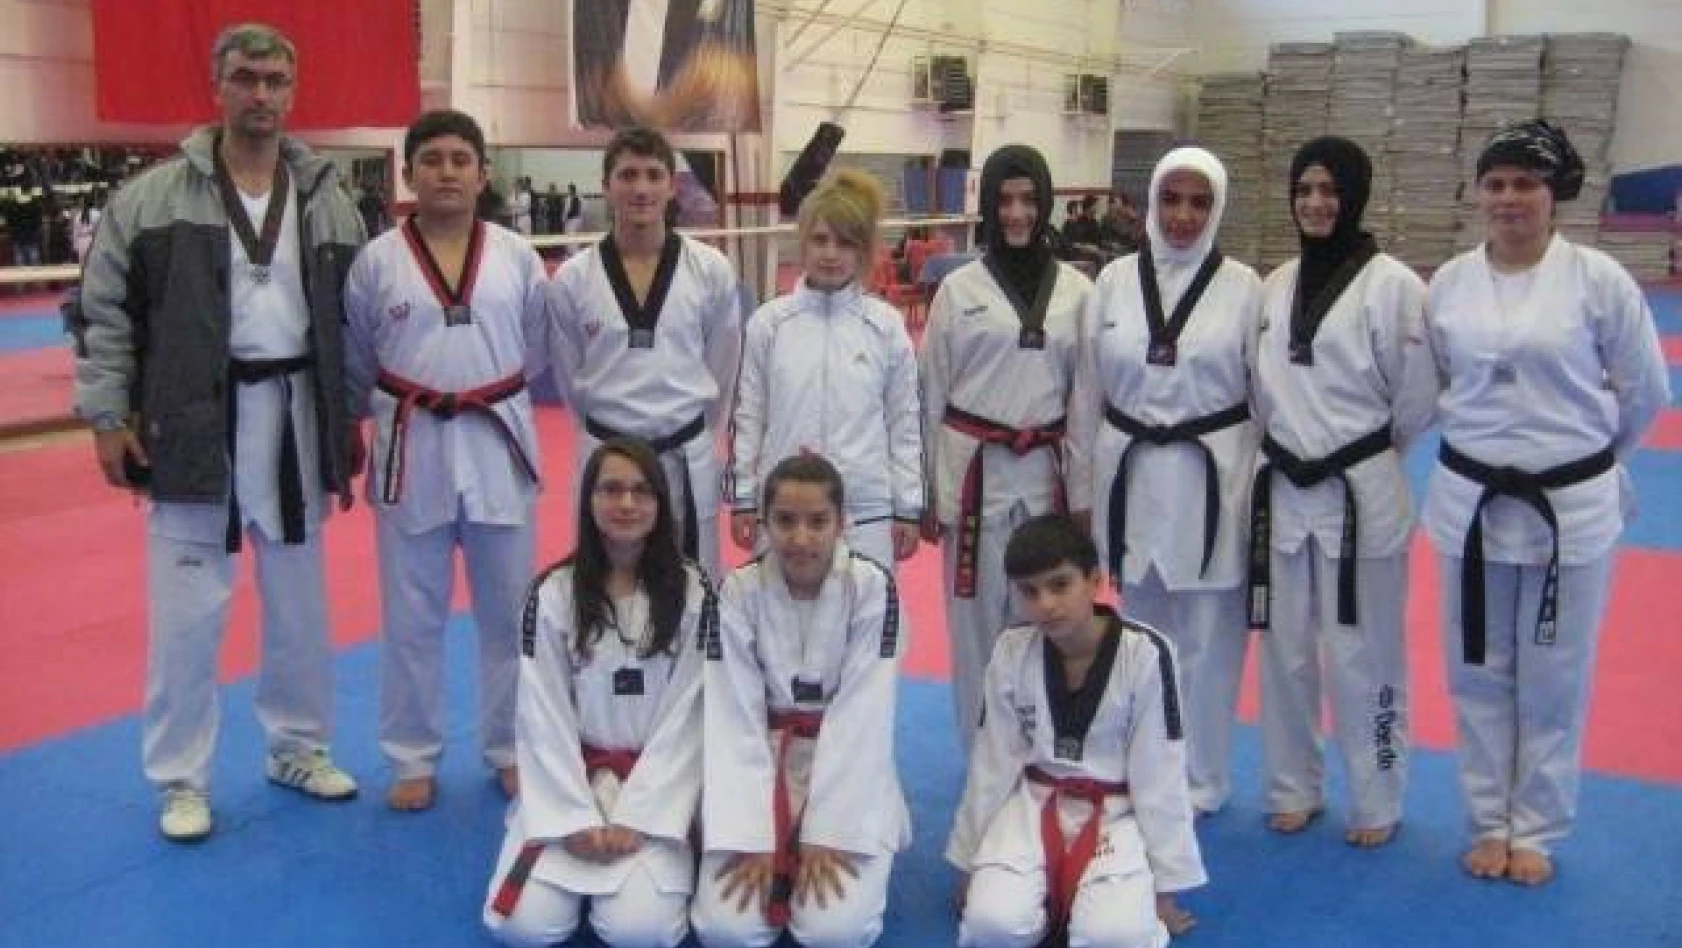 Taekwondo Dan Sınavı 28.12.2013 Ankara